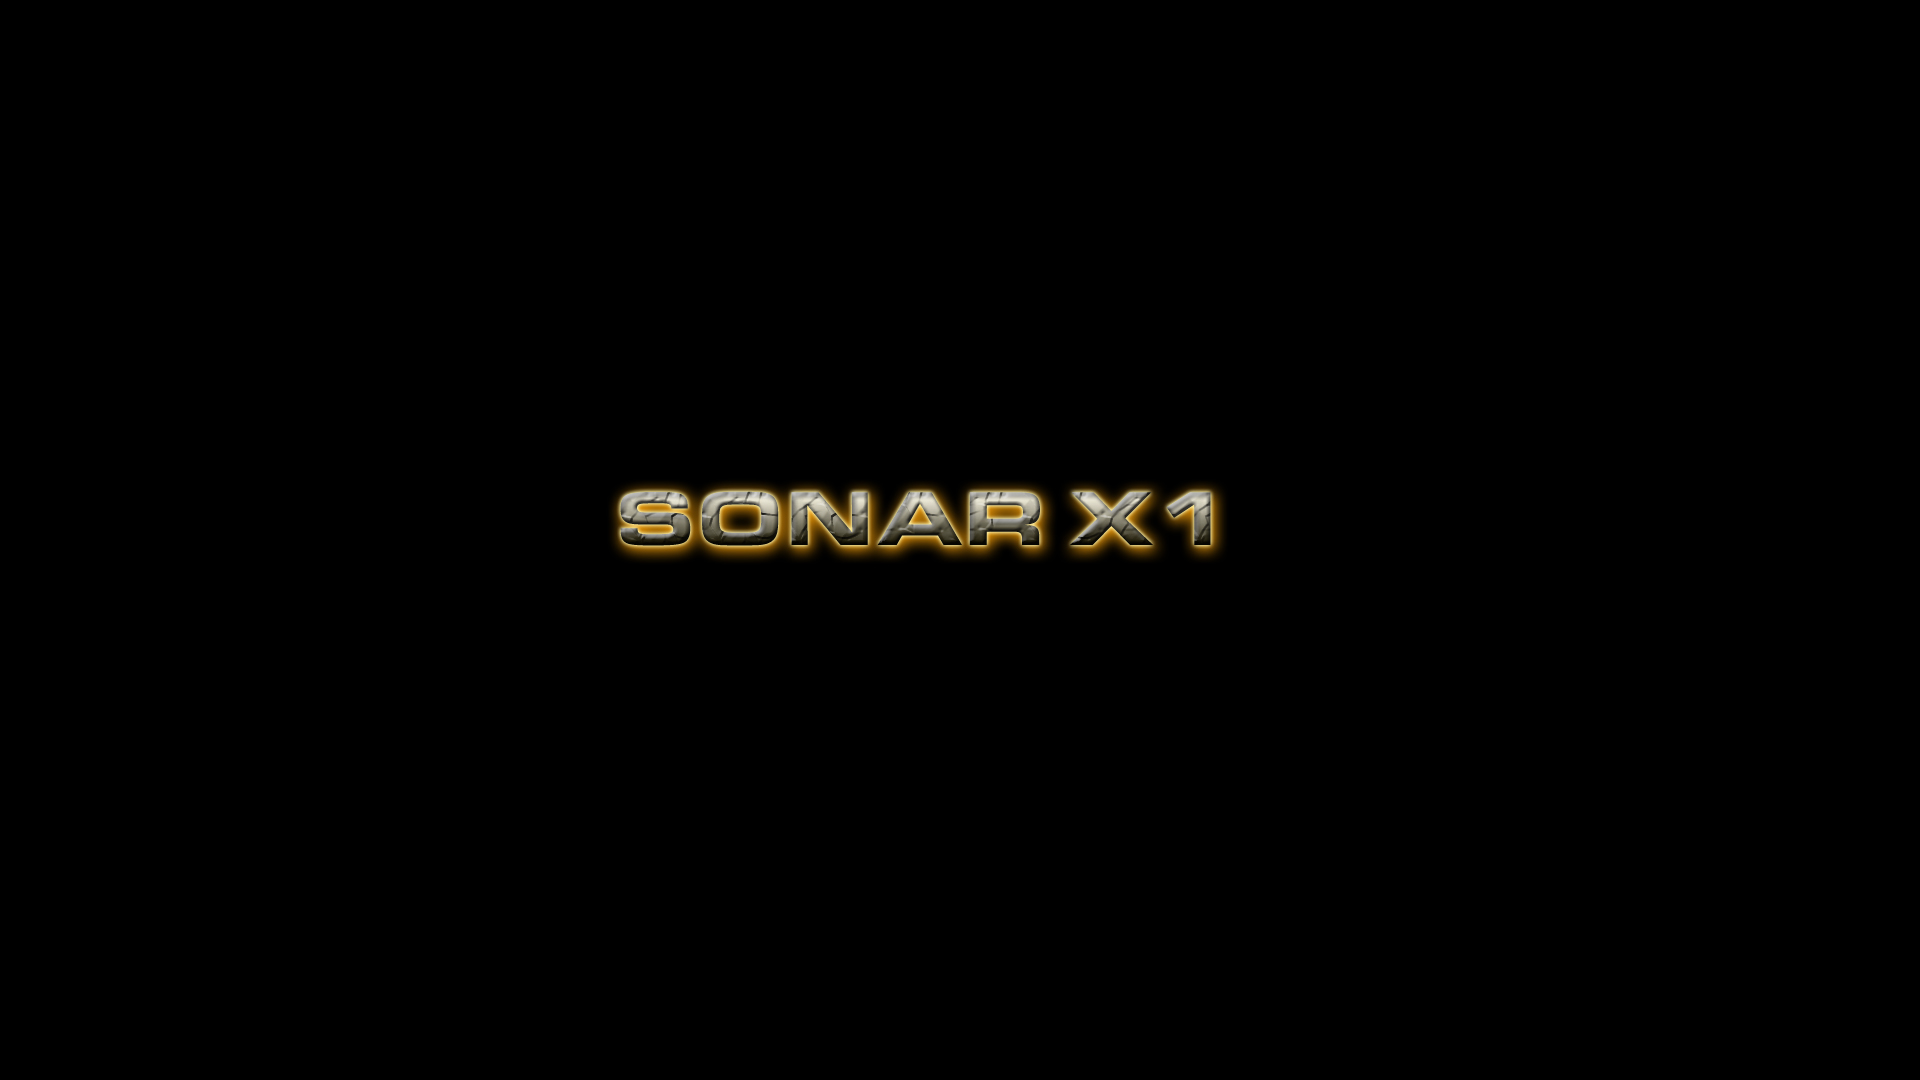 Sonar X1 Wallpaper 1920x1080